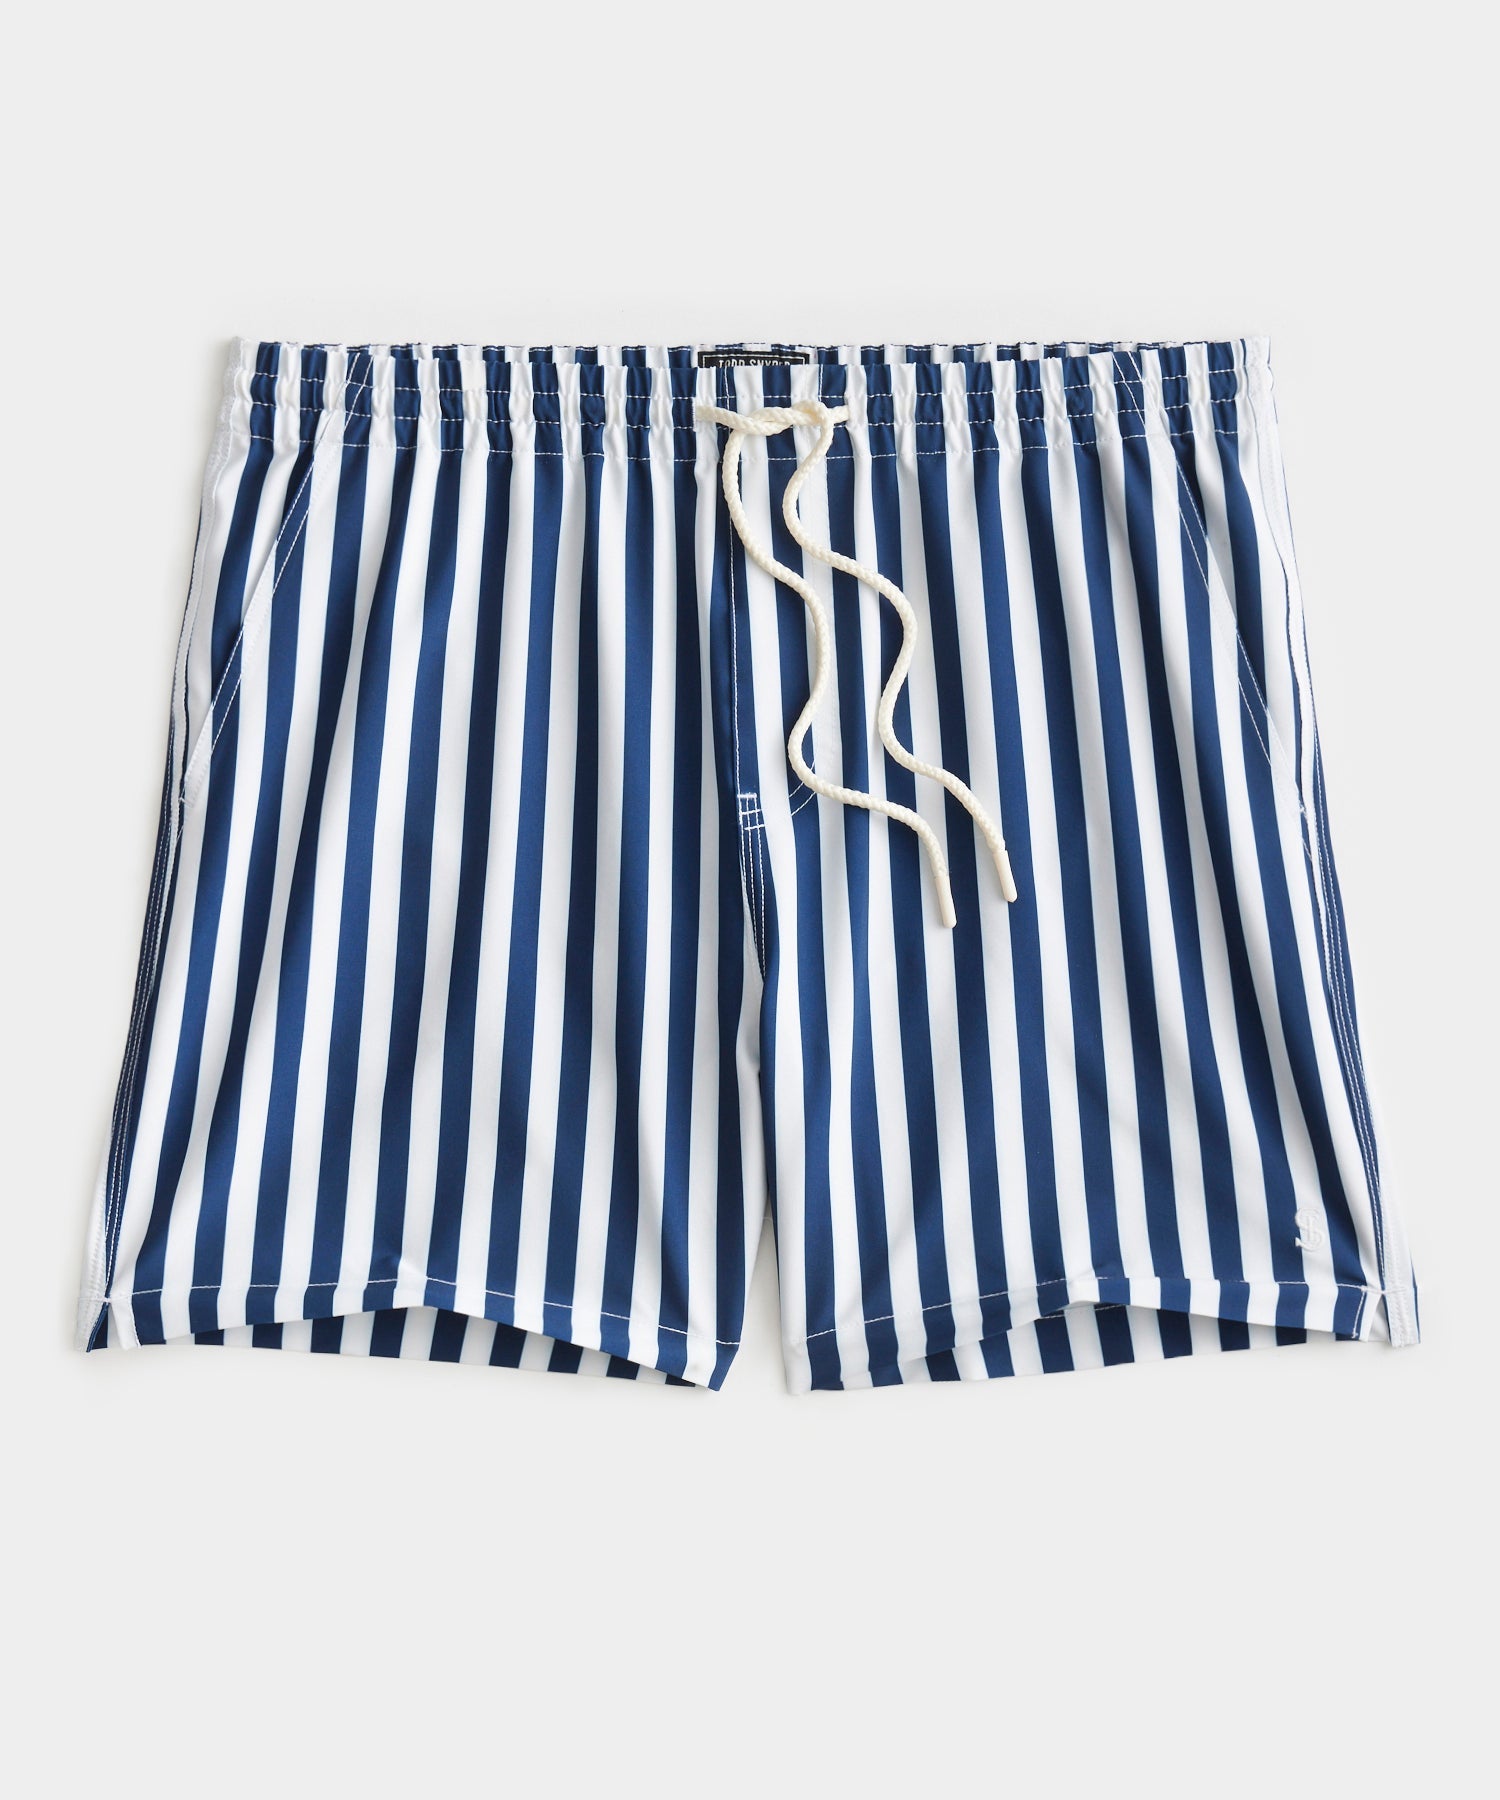 5" Montauk Swim Short in Navy Candy Stripe